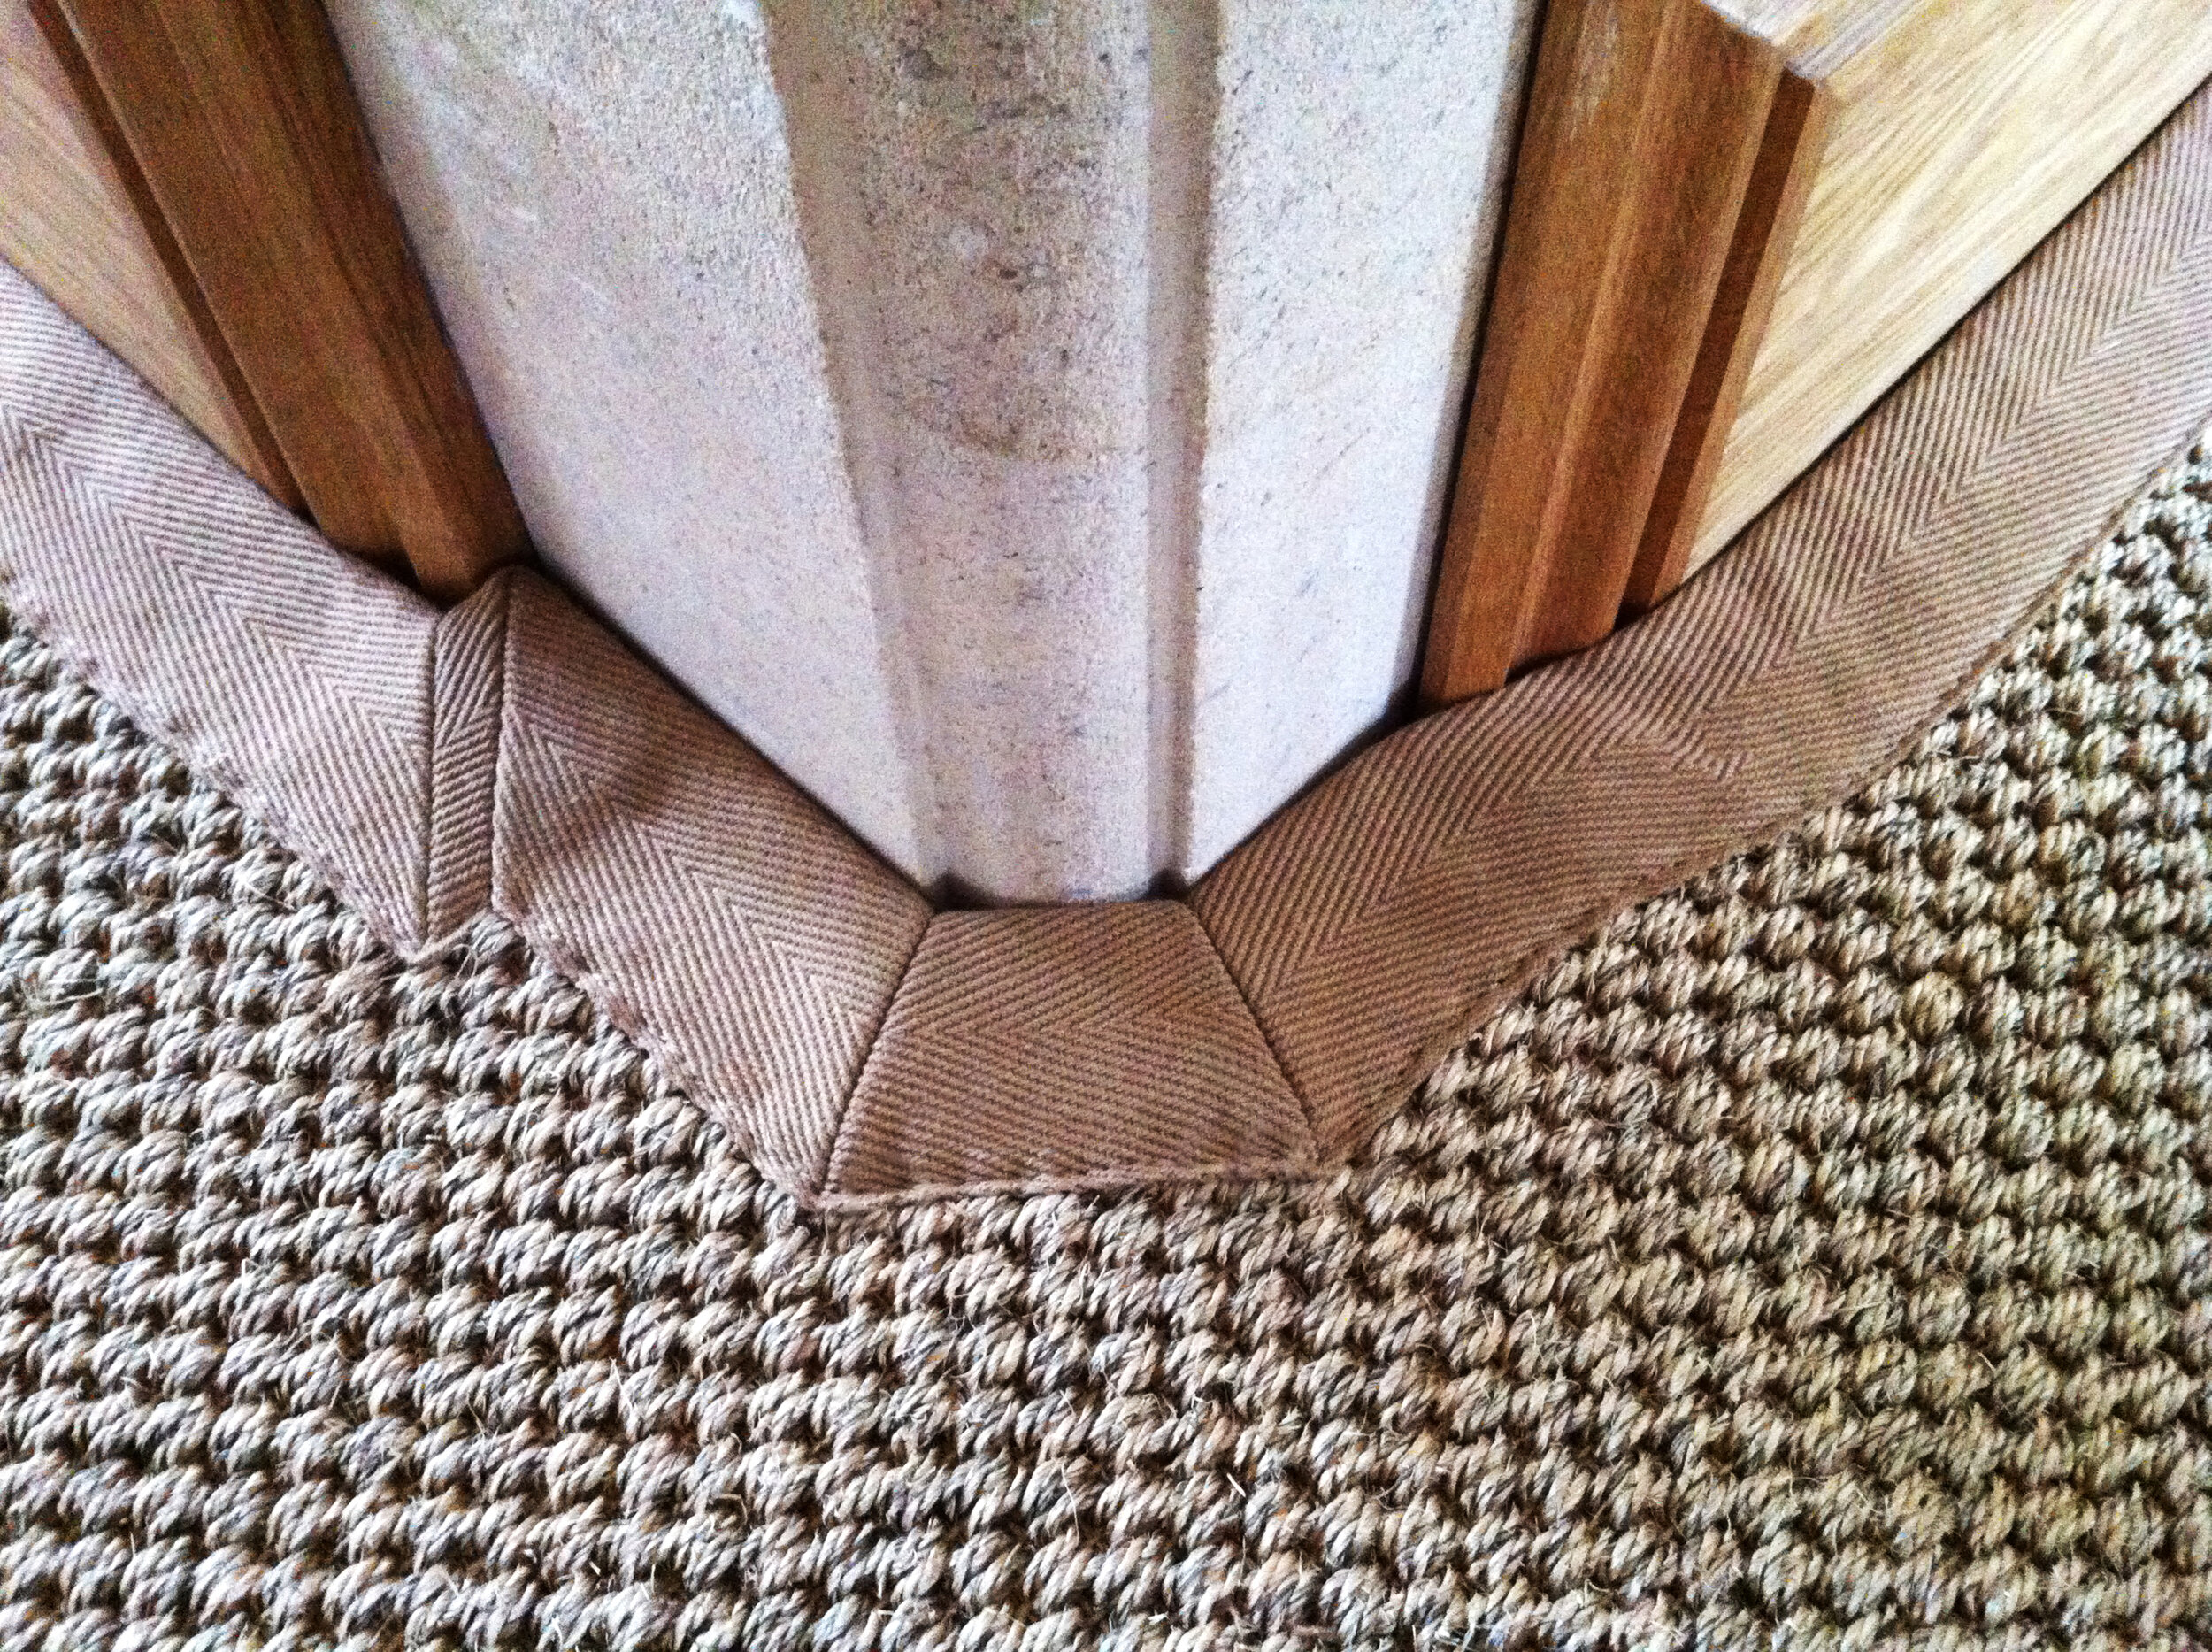 Carpet Edging